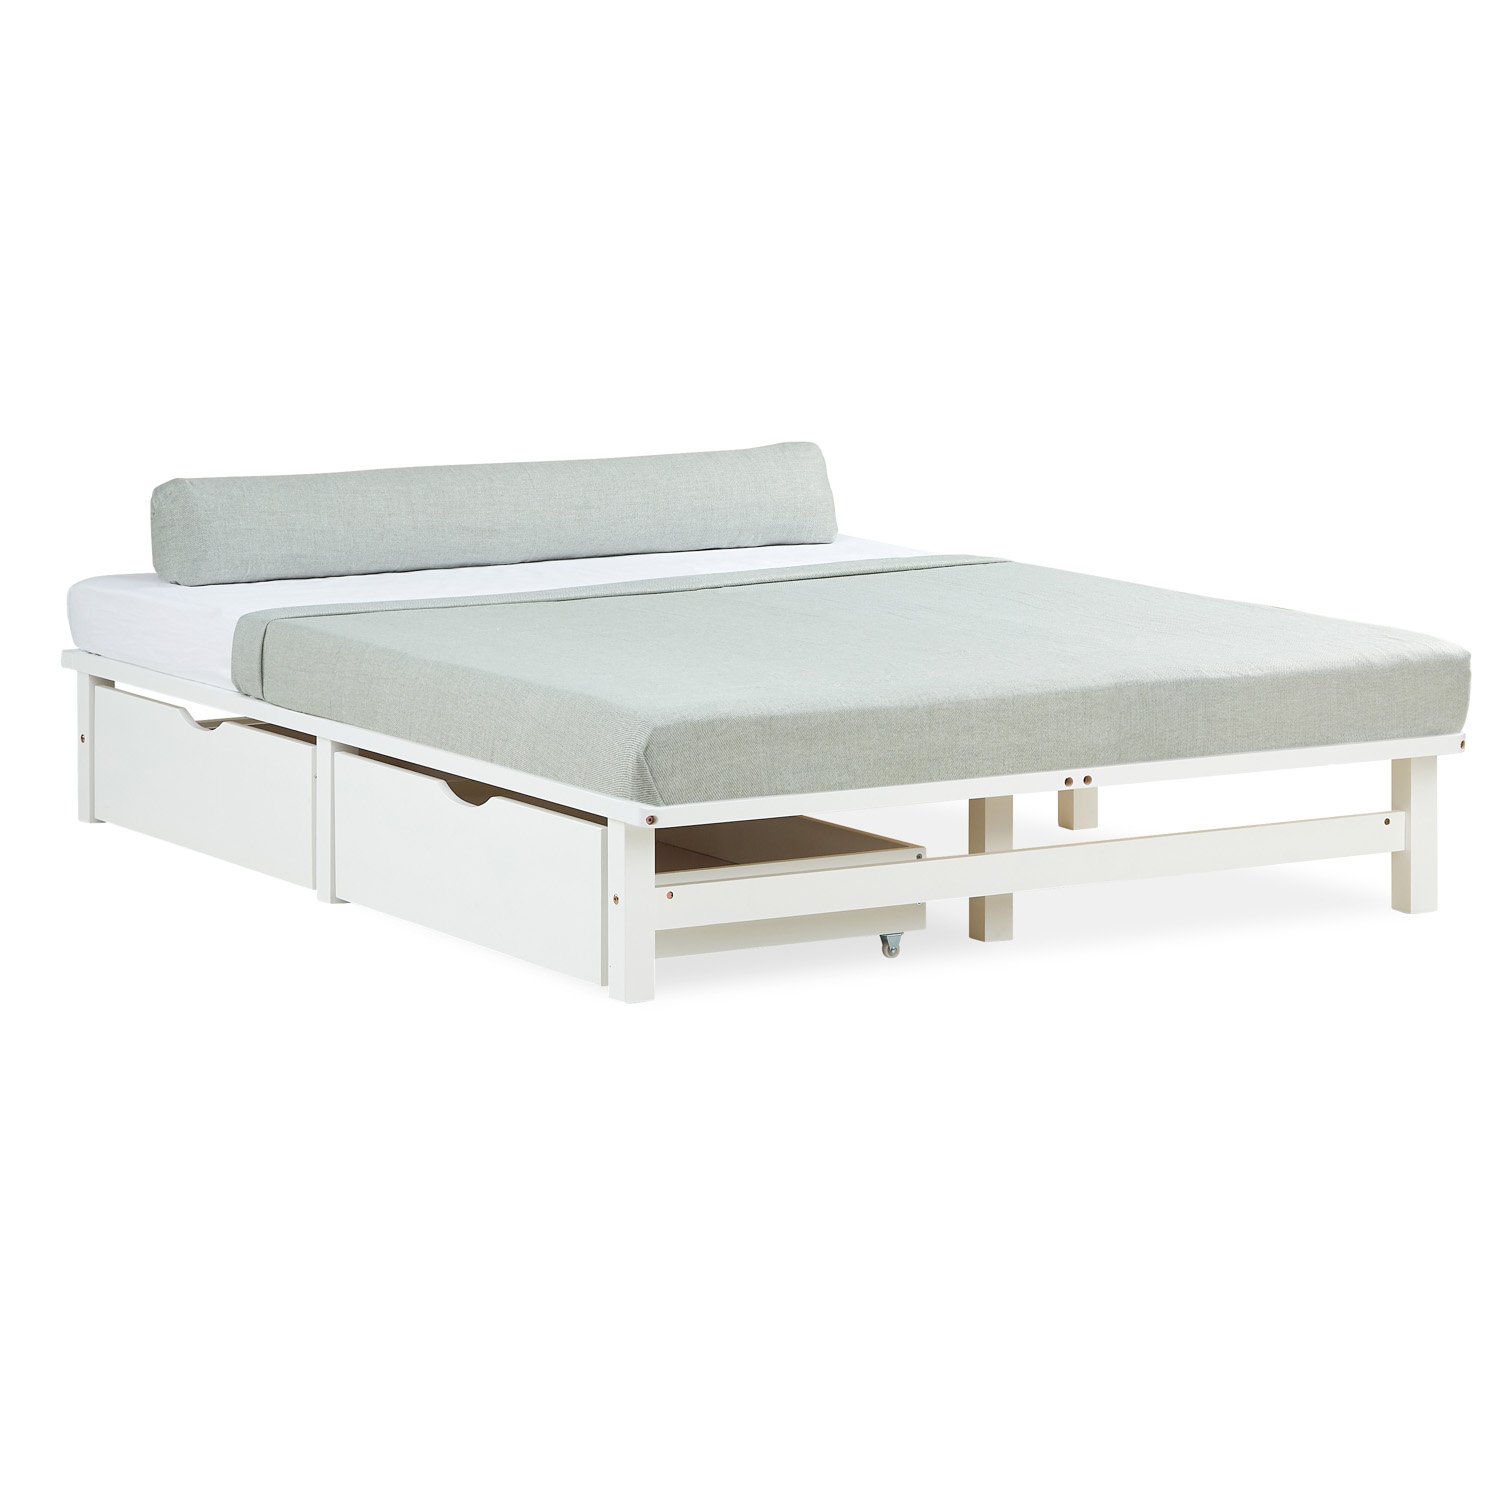 Pallet Bed 140x200 cm with Bed Drawer Set of 2 Slatts Solid Wooden Bed White Pallet Furniture